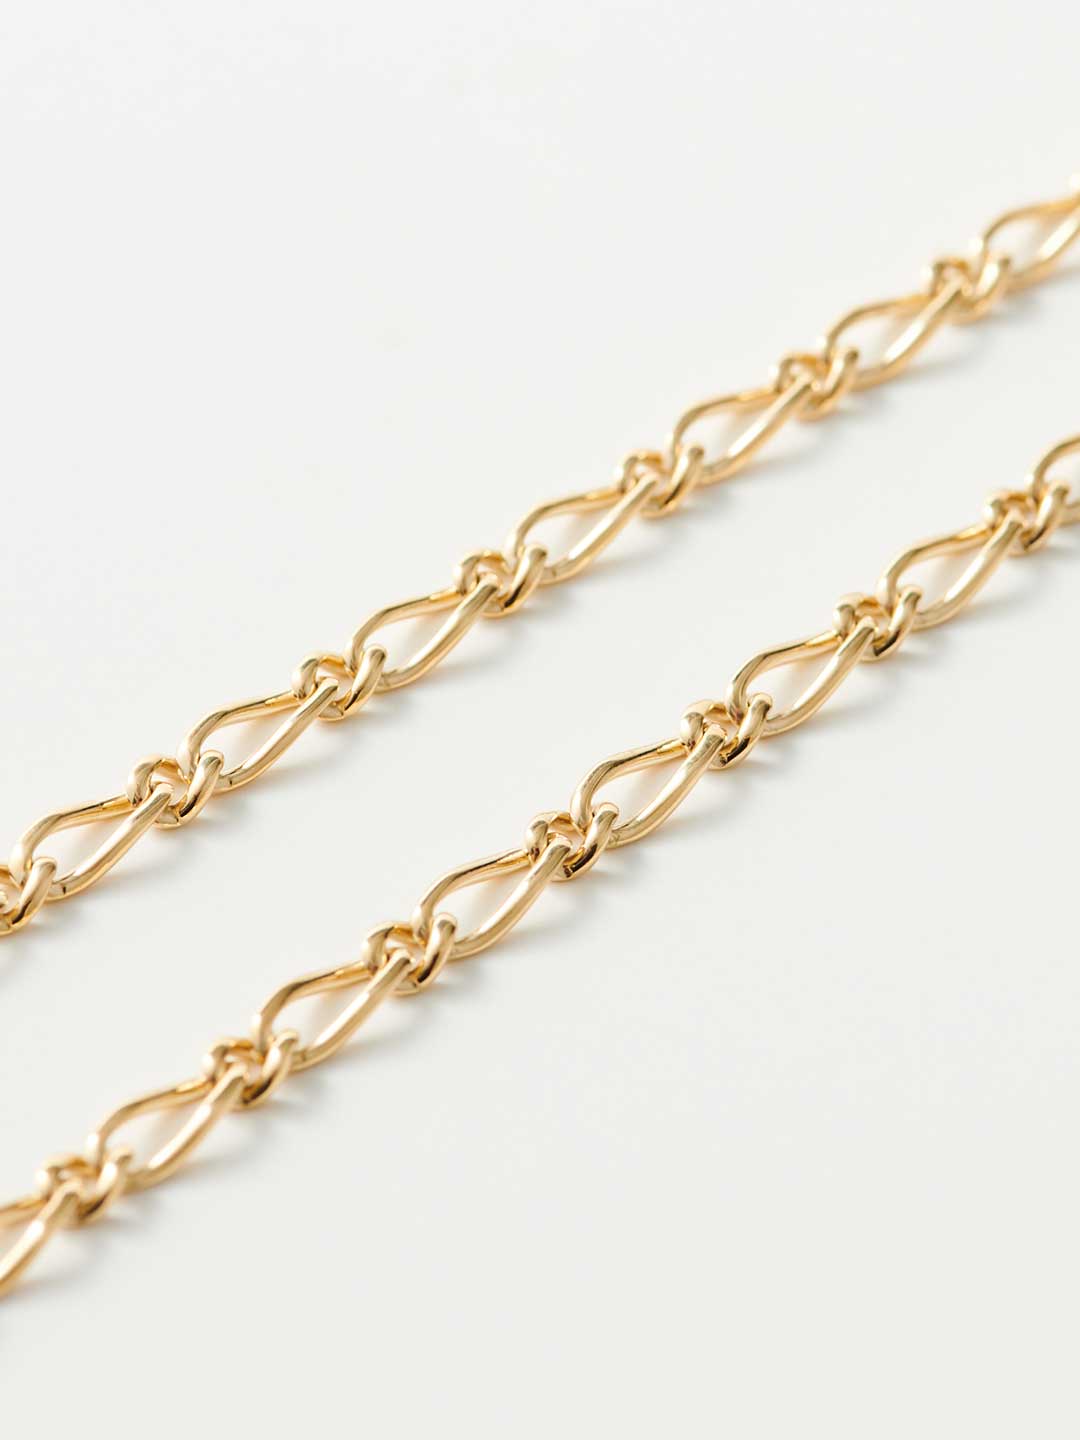 Long & Short Necklace 38cm / L&S 1:1 - Yellow Gold